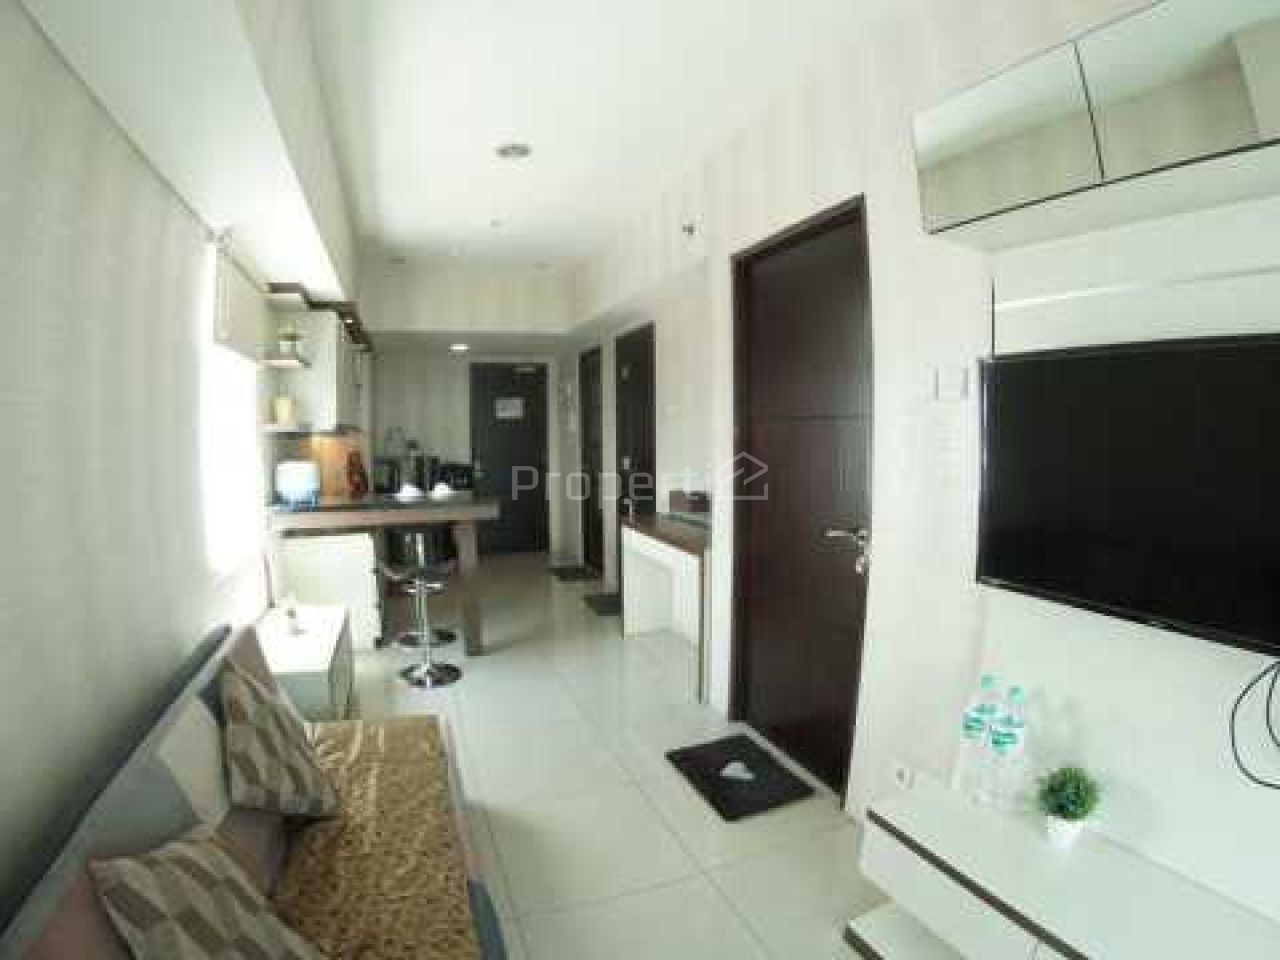 Corner Apartment Unit at La Grande Apartment, Bandung City, Jawa Barat